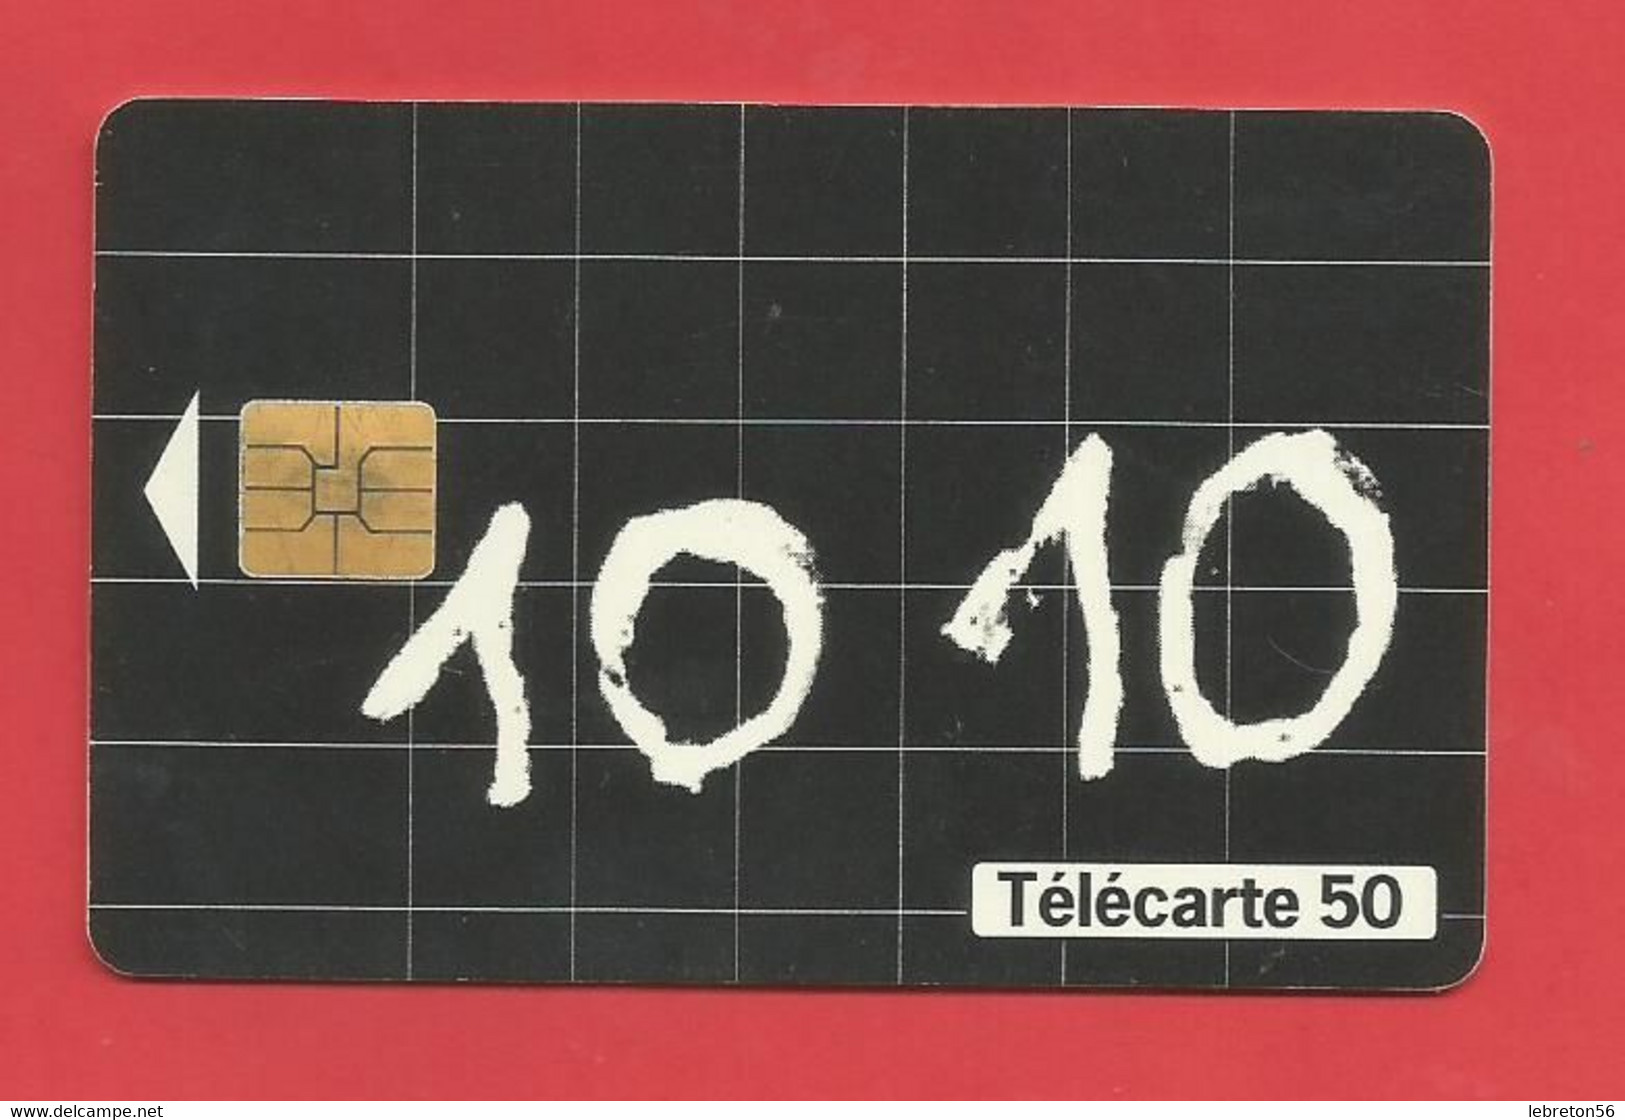 TELECARTE 50  U TIRAGE 1000 000 EX. France Télécom Appelez Le 10 10*---- X 2 Scan - Telecom